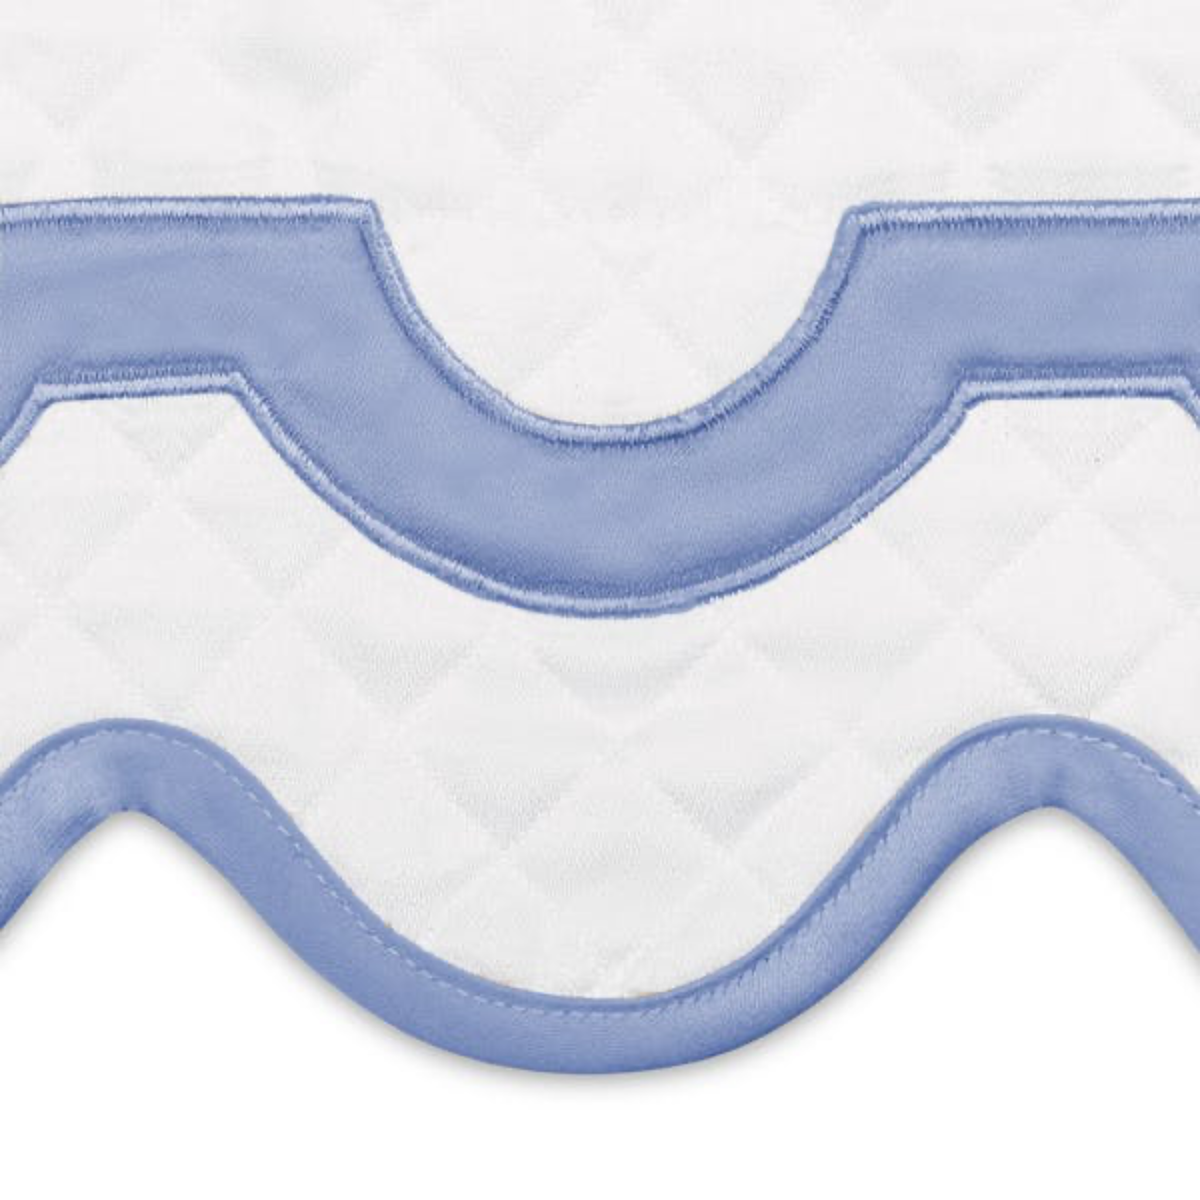 Swatch Sample of Matouk Mirasol Matelassé Bedding in Azure Color